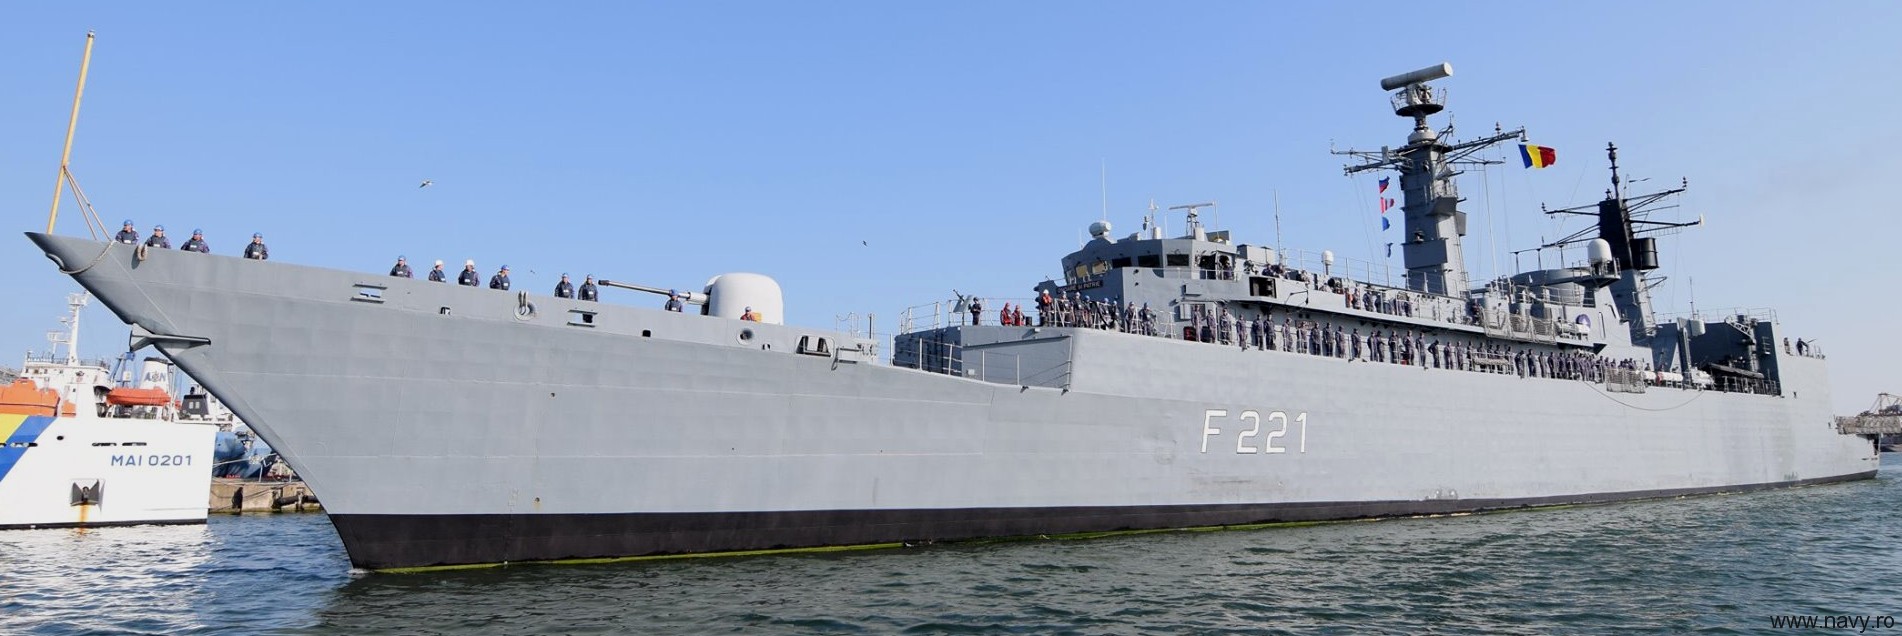 f-221 ros regele ferdinand frigate romanian navy type 22 broadsword class 77